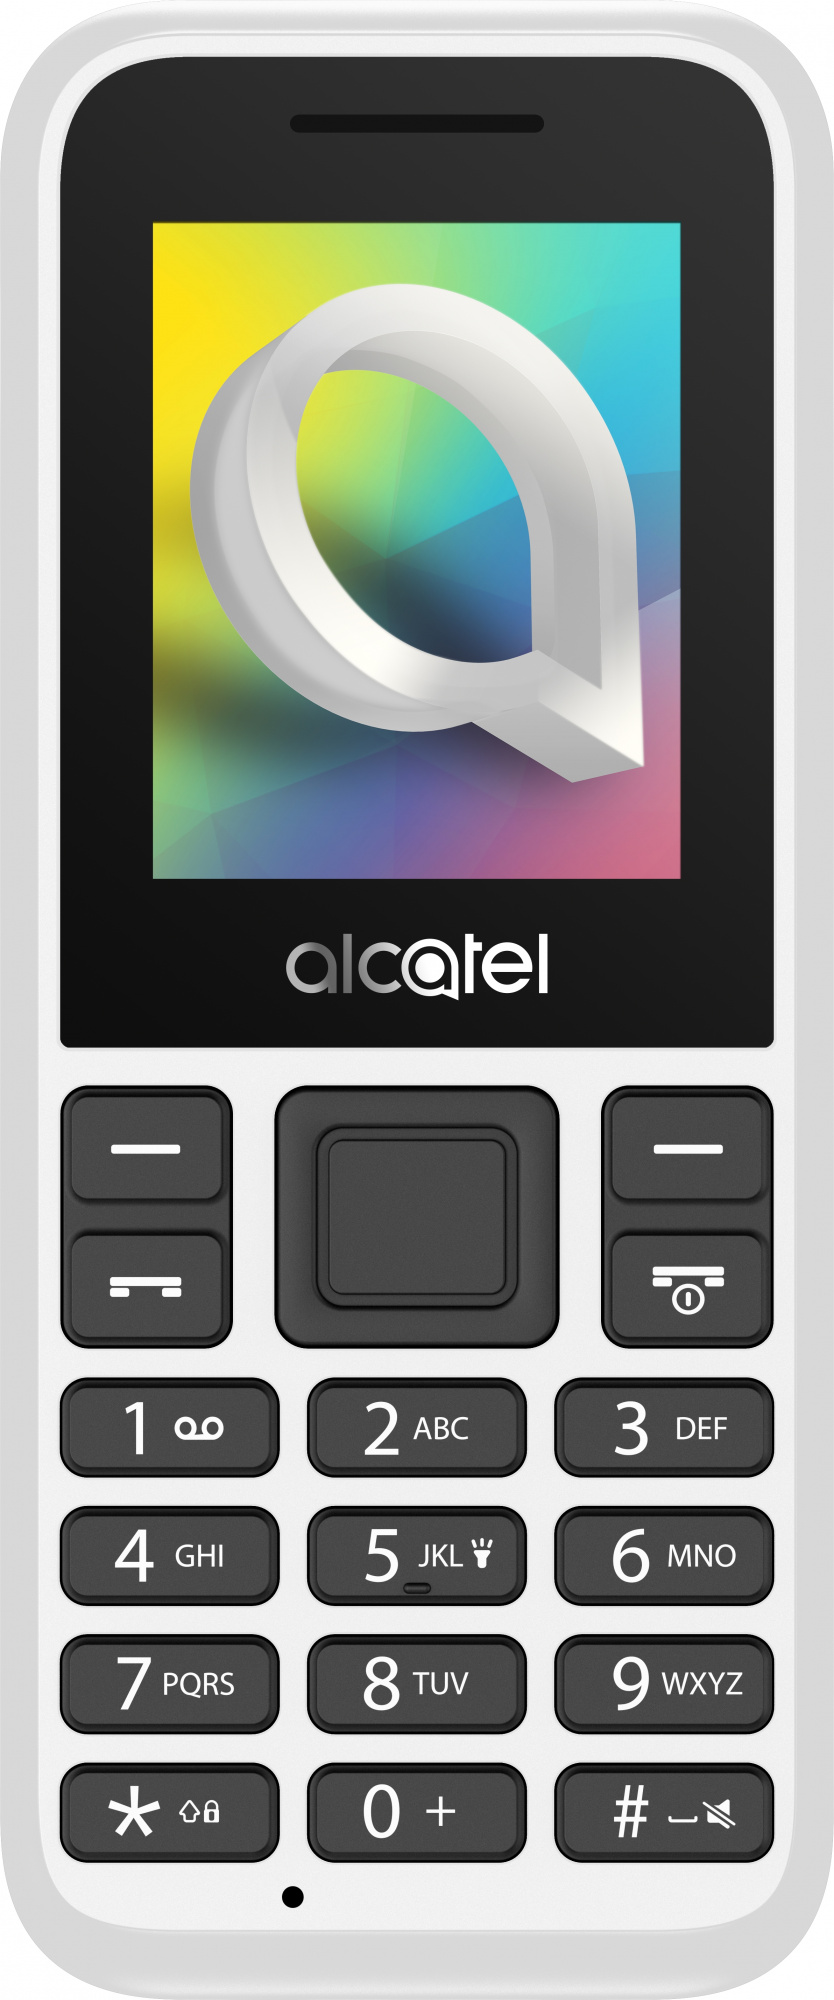 Мобильный телефон Alcatel 1068D белый моноблок 2Sim 1.8" 128x160 Thread-X 0.08Mpix GSM900/1800 GSM1900 MP3 FM microSD max32Gb